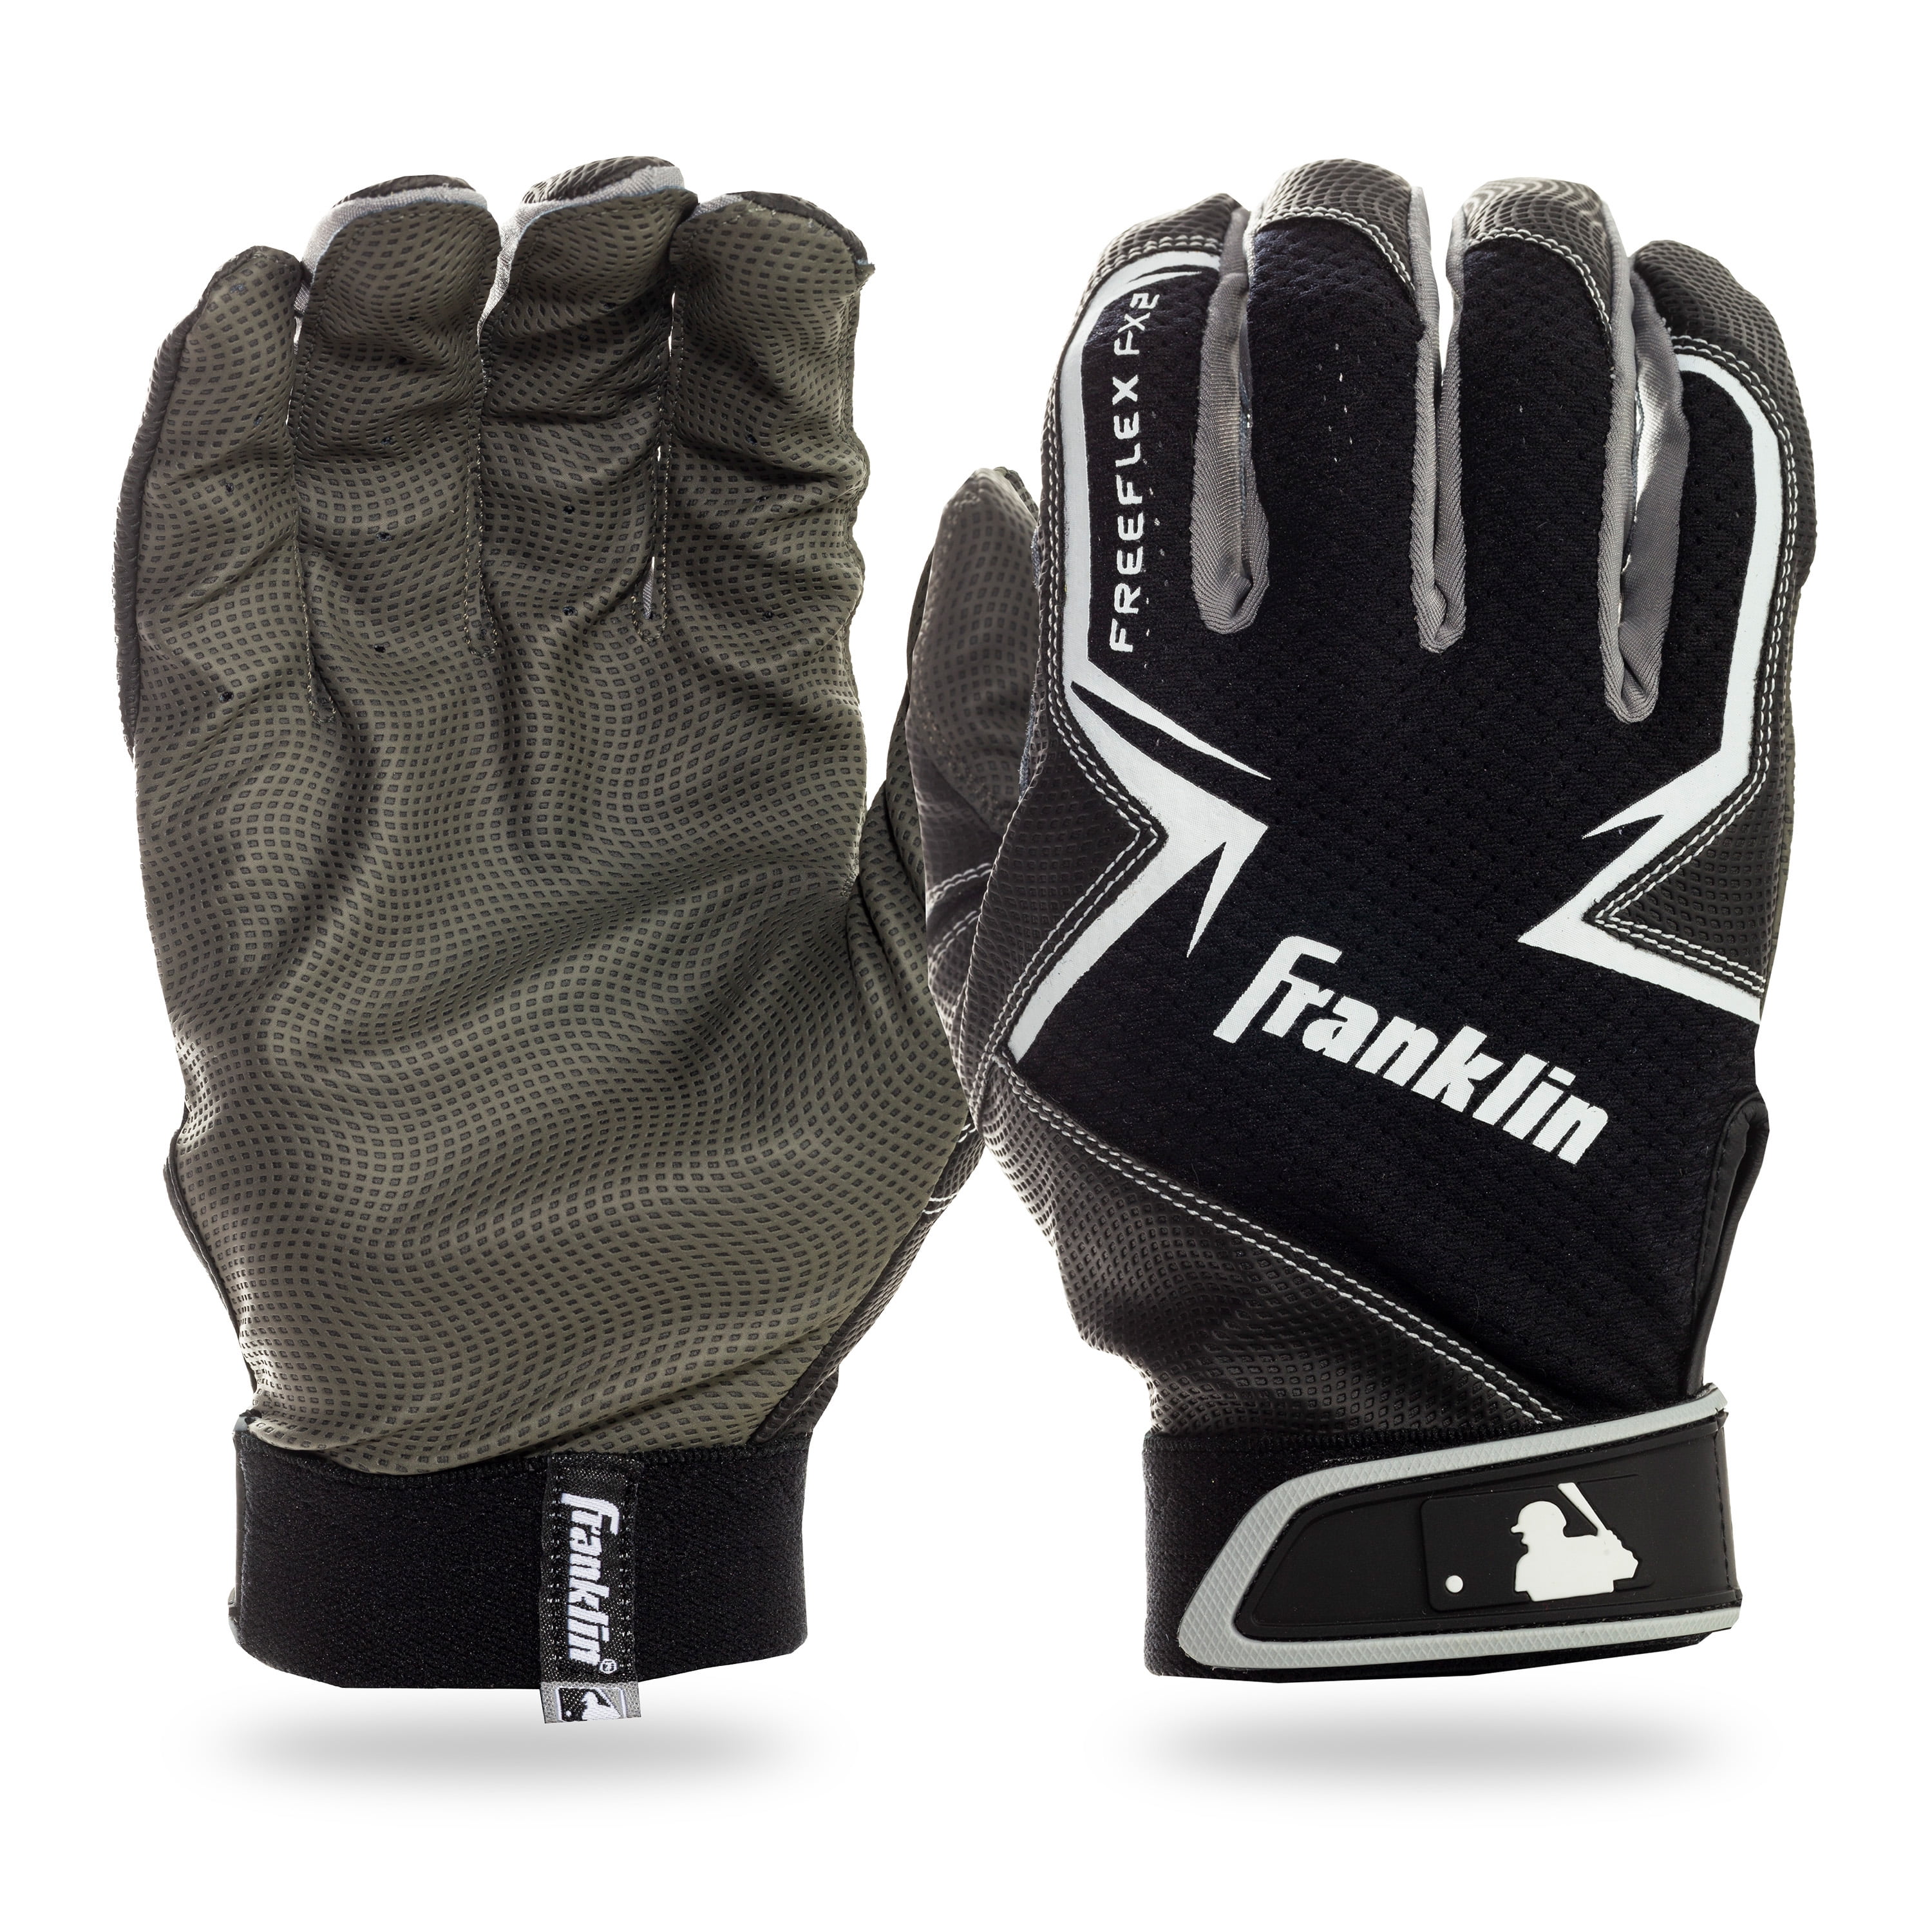 New Franklin Freeflex FX4 Pair Baseball Batting Gloves Youth Small S Blue White